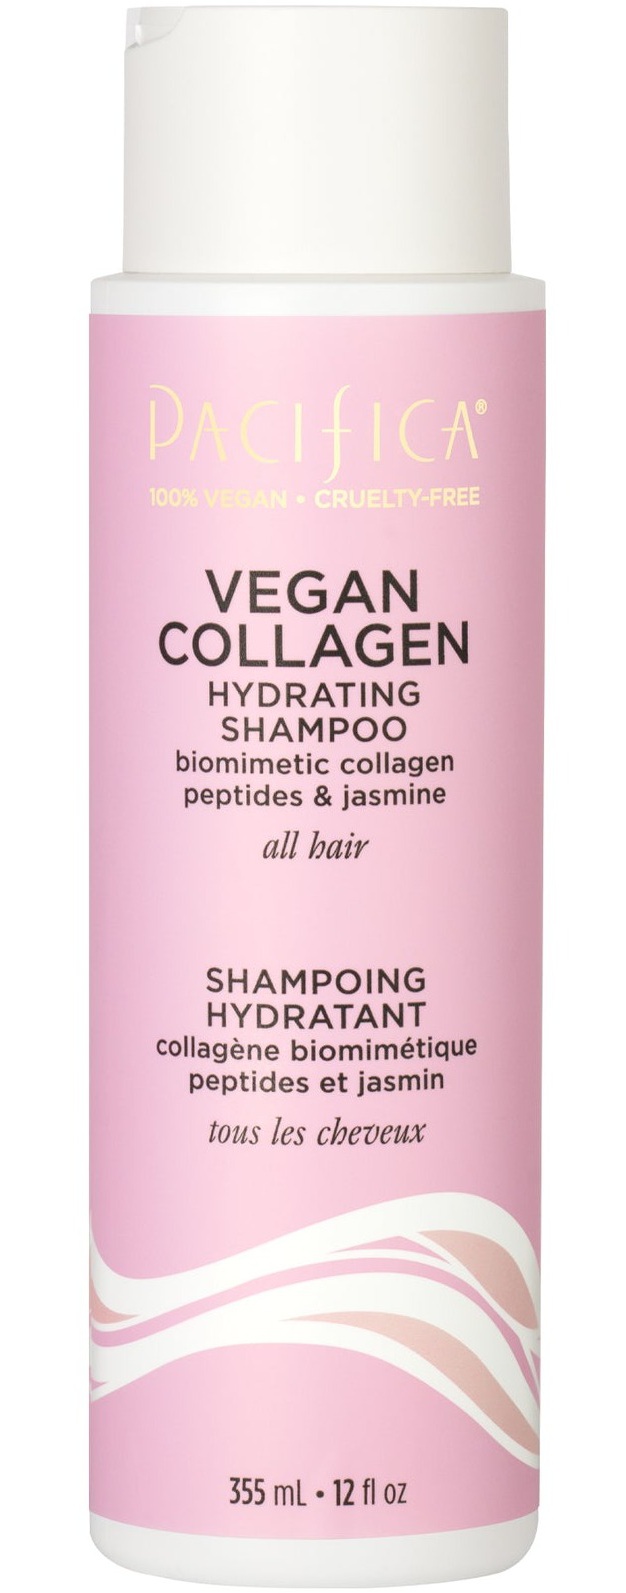 Pacifica Vegan Collagen Hydrating Shampoo